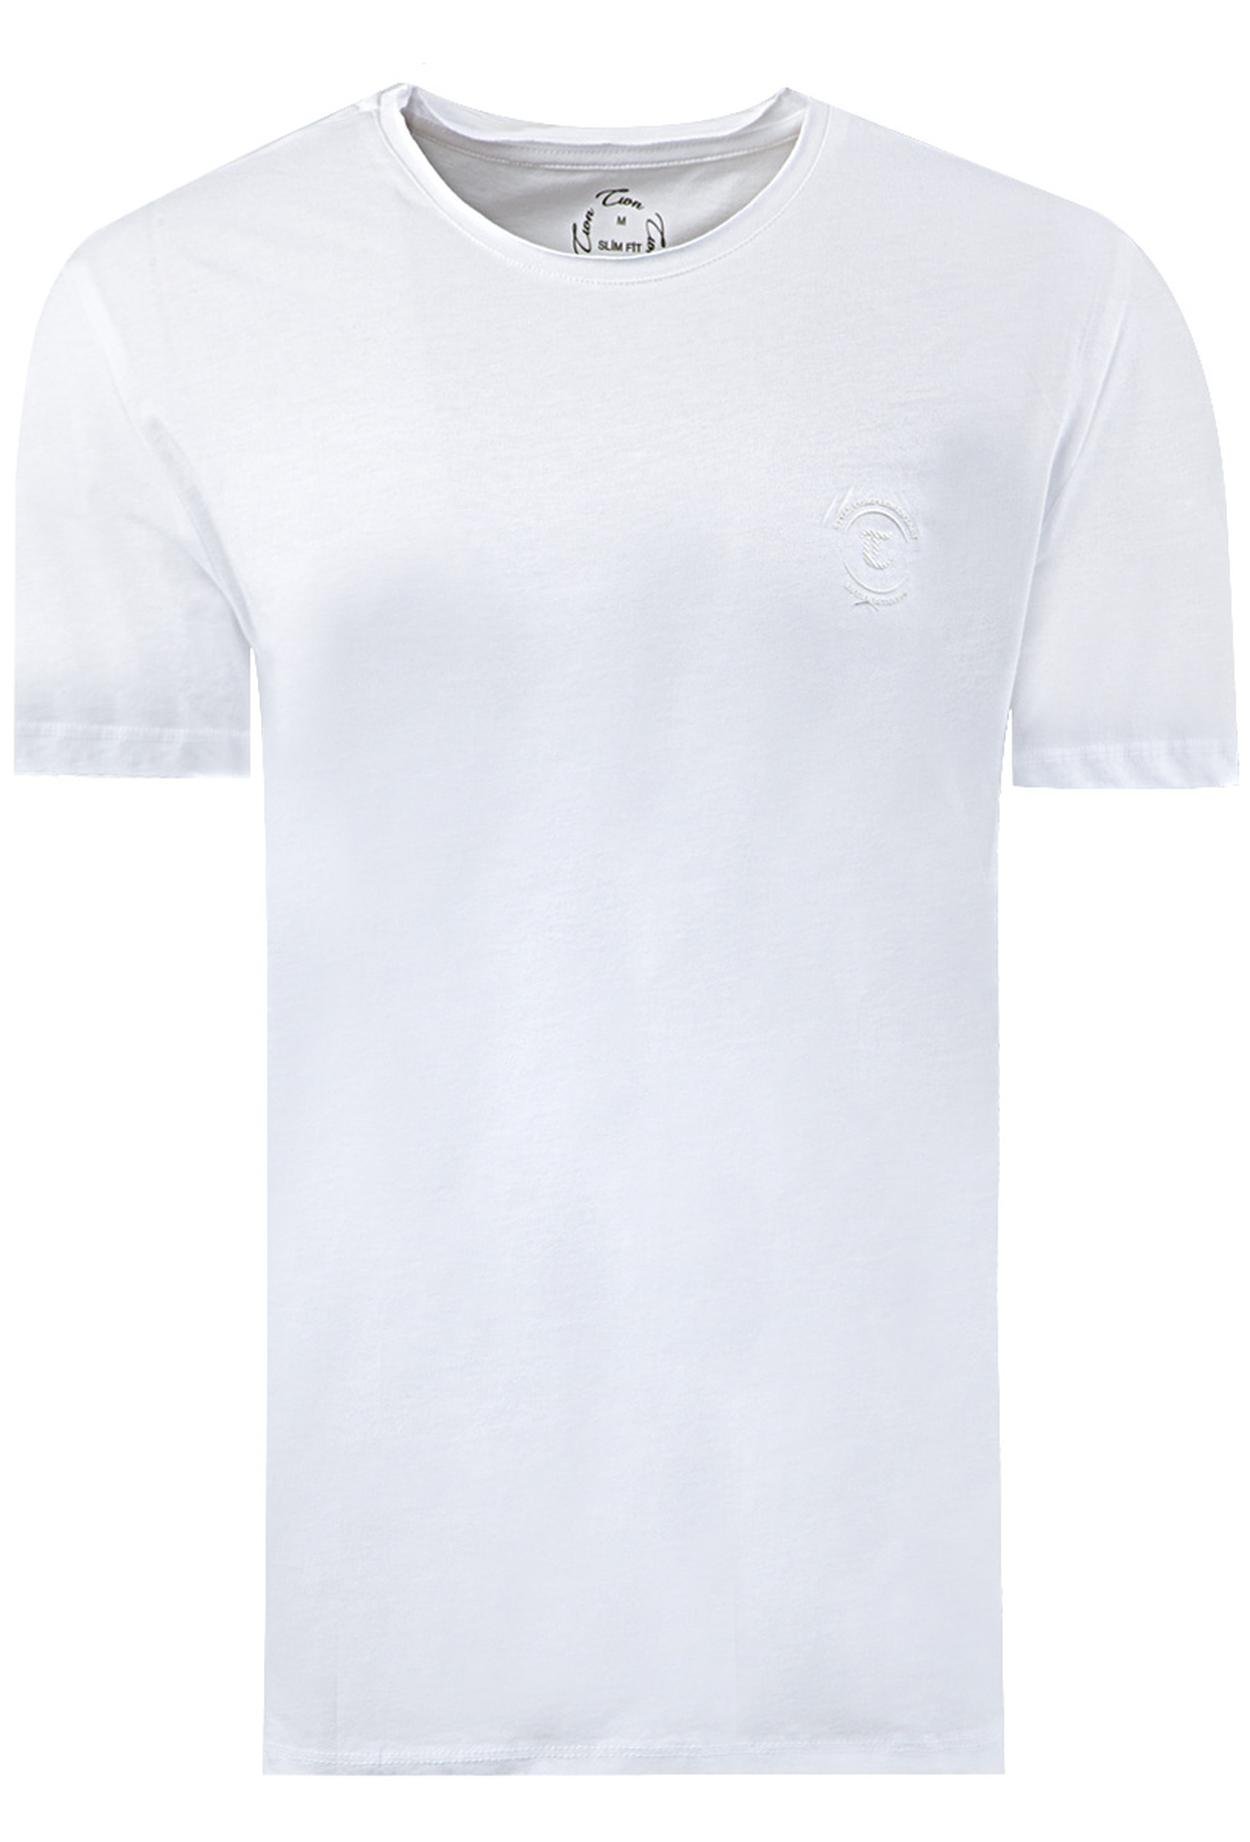 Twn Slim Fit Beyaz T-Shirt